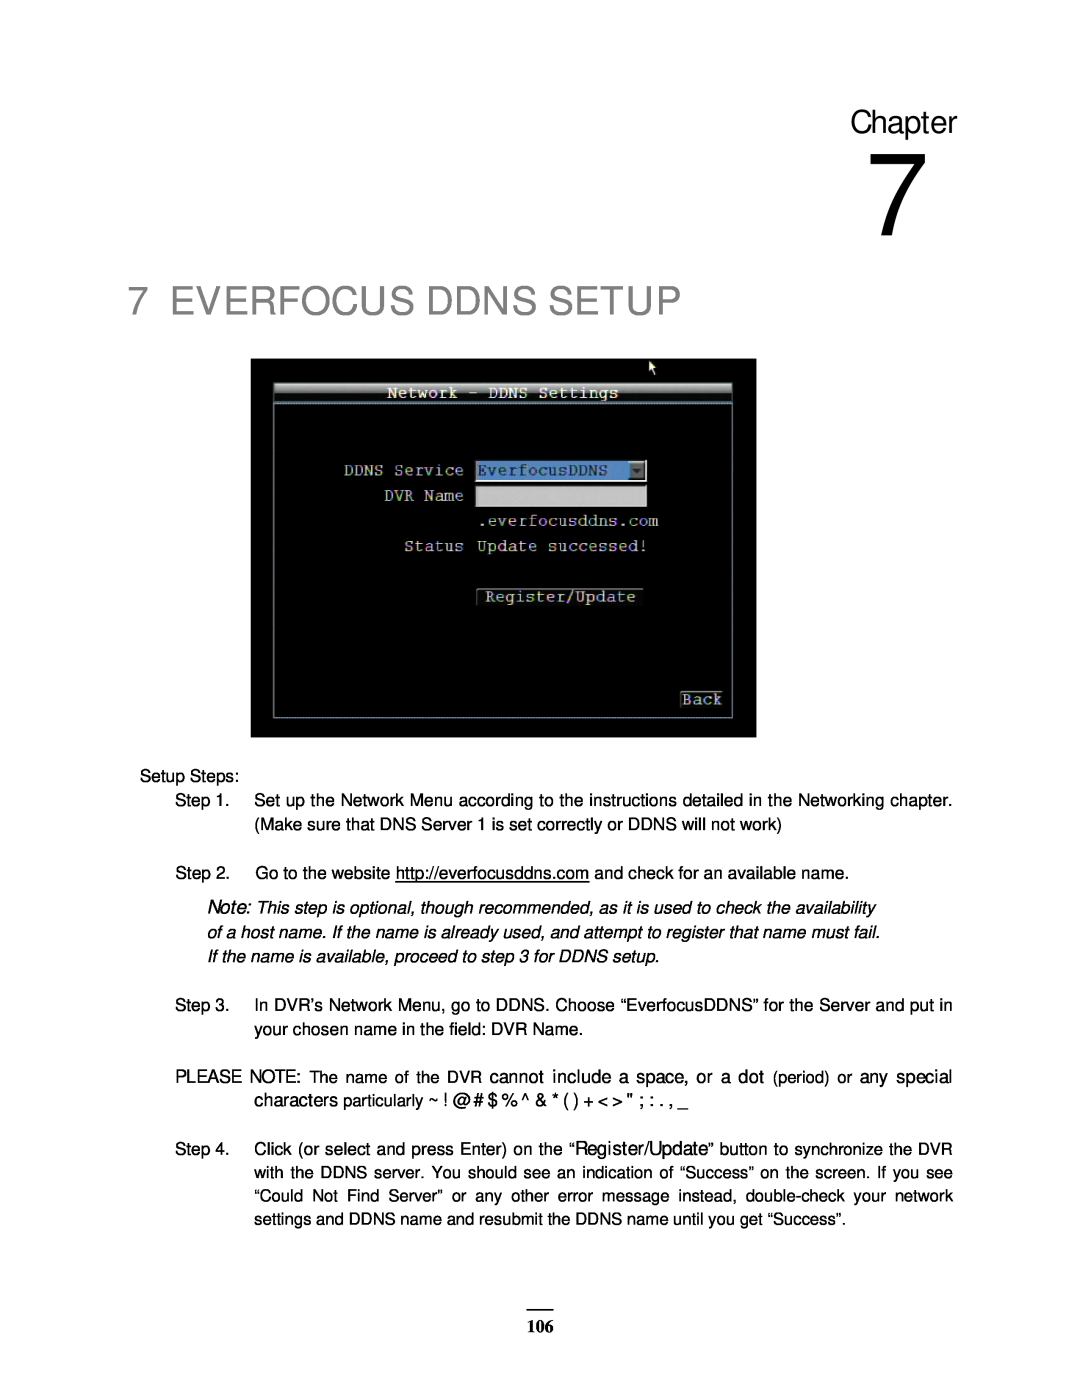 EverFocus EMV400 user manual Everfocus Ddns Setup, Chapter 